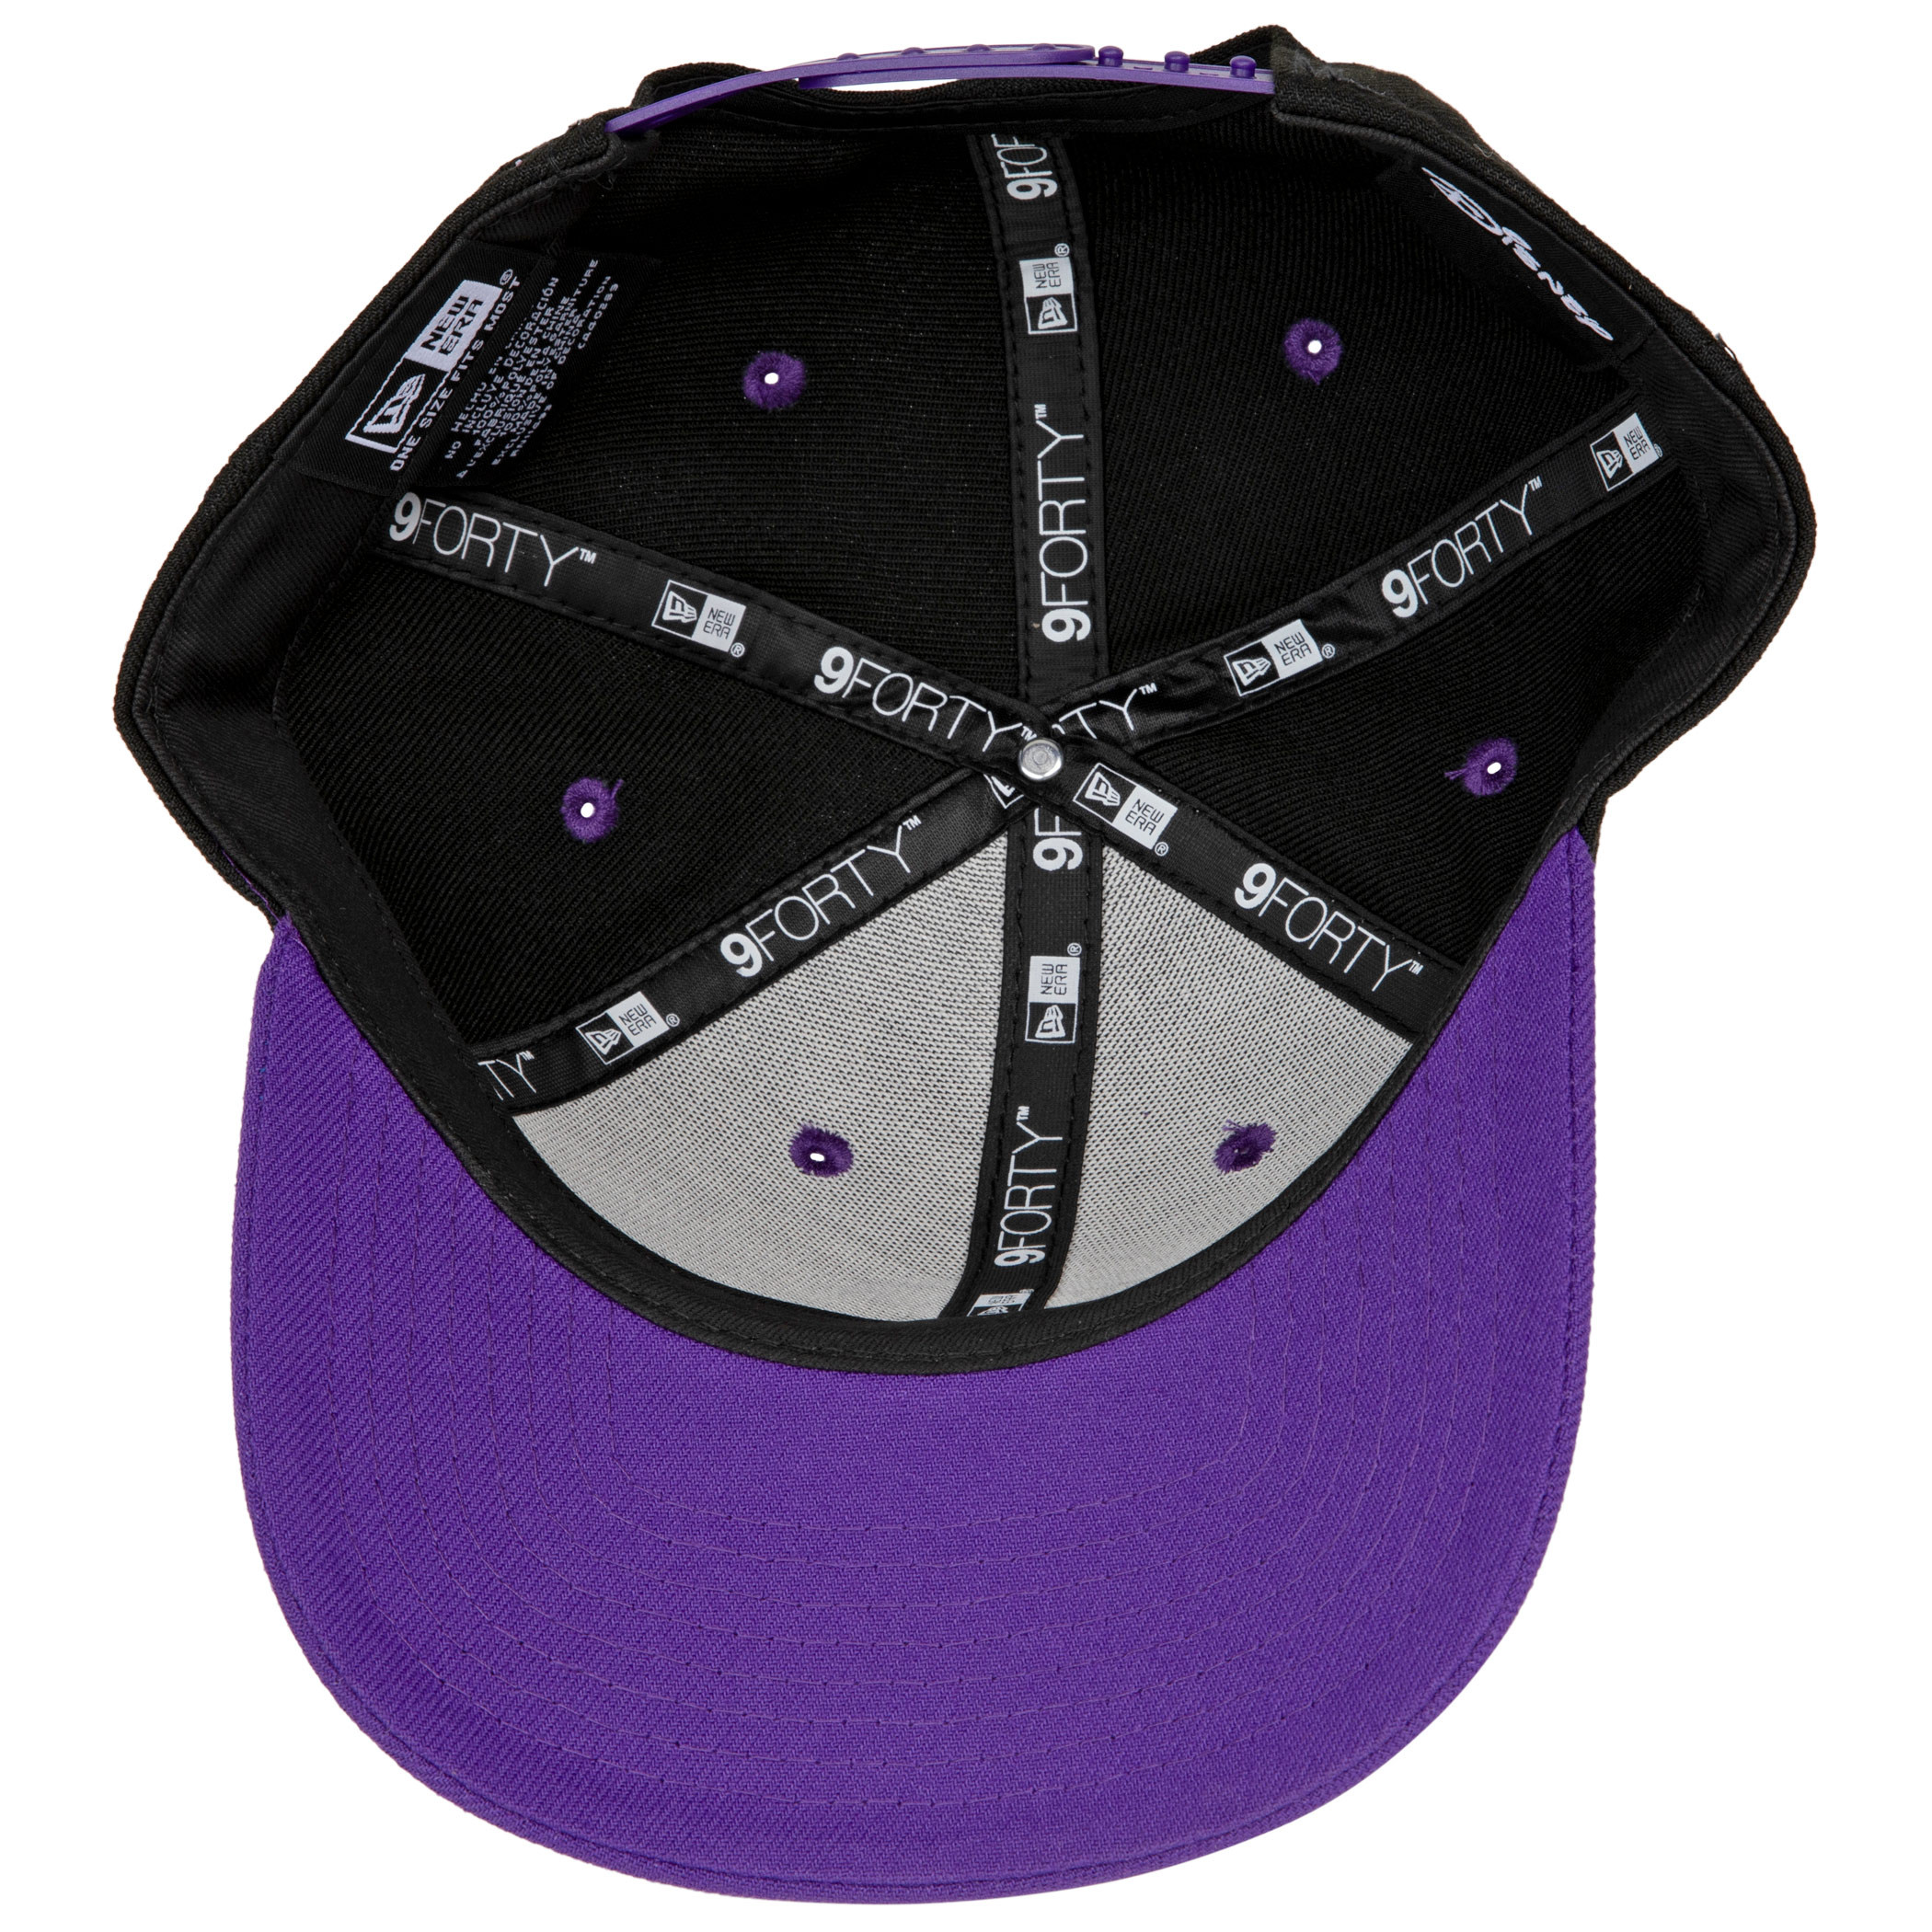 New Era 9Forty Baseball Skull Adjustable Hat